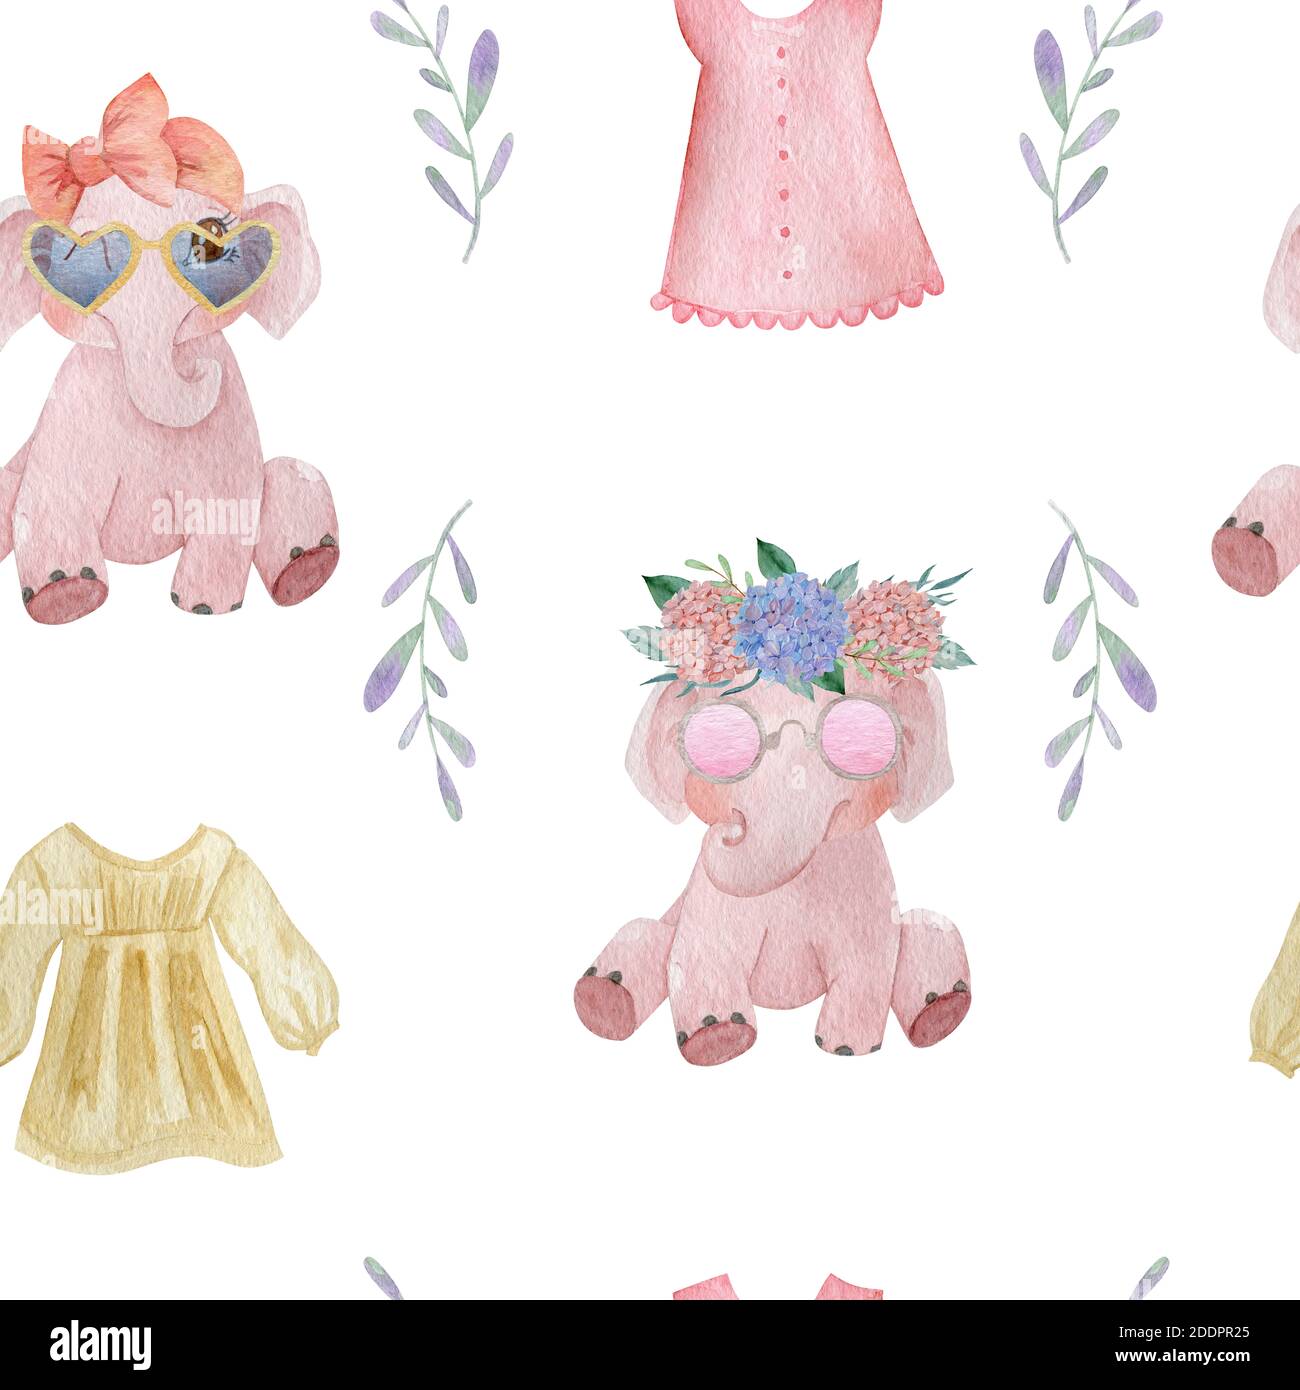 Hand painted cute elephant children textile pattern design. Stock Photo